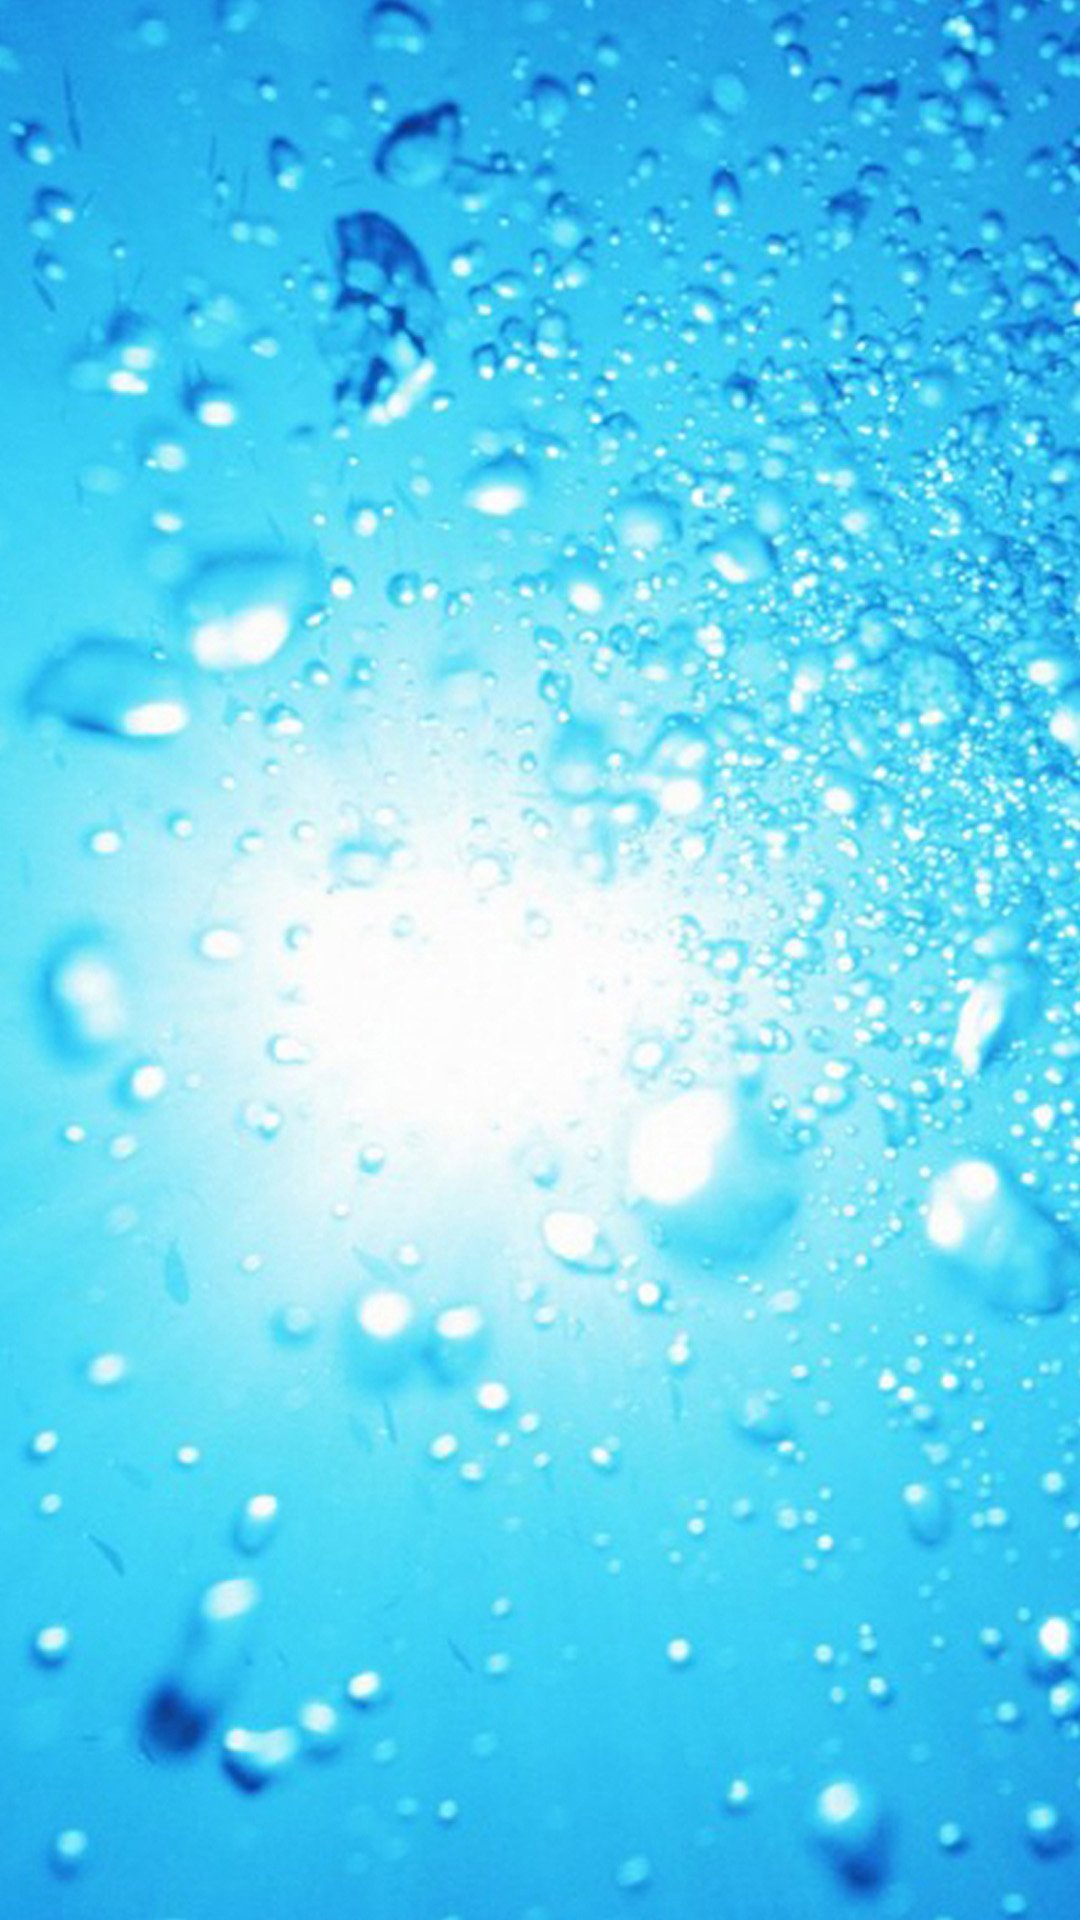 Blue Water Drops 8 S4 Wallpaper Samsung Galaxy S4 Wallpapers 1080x1920